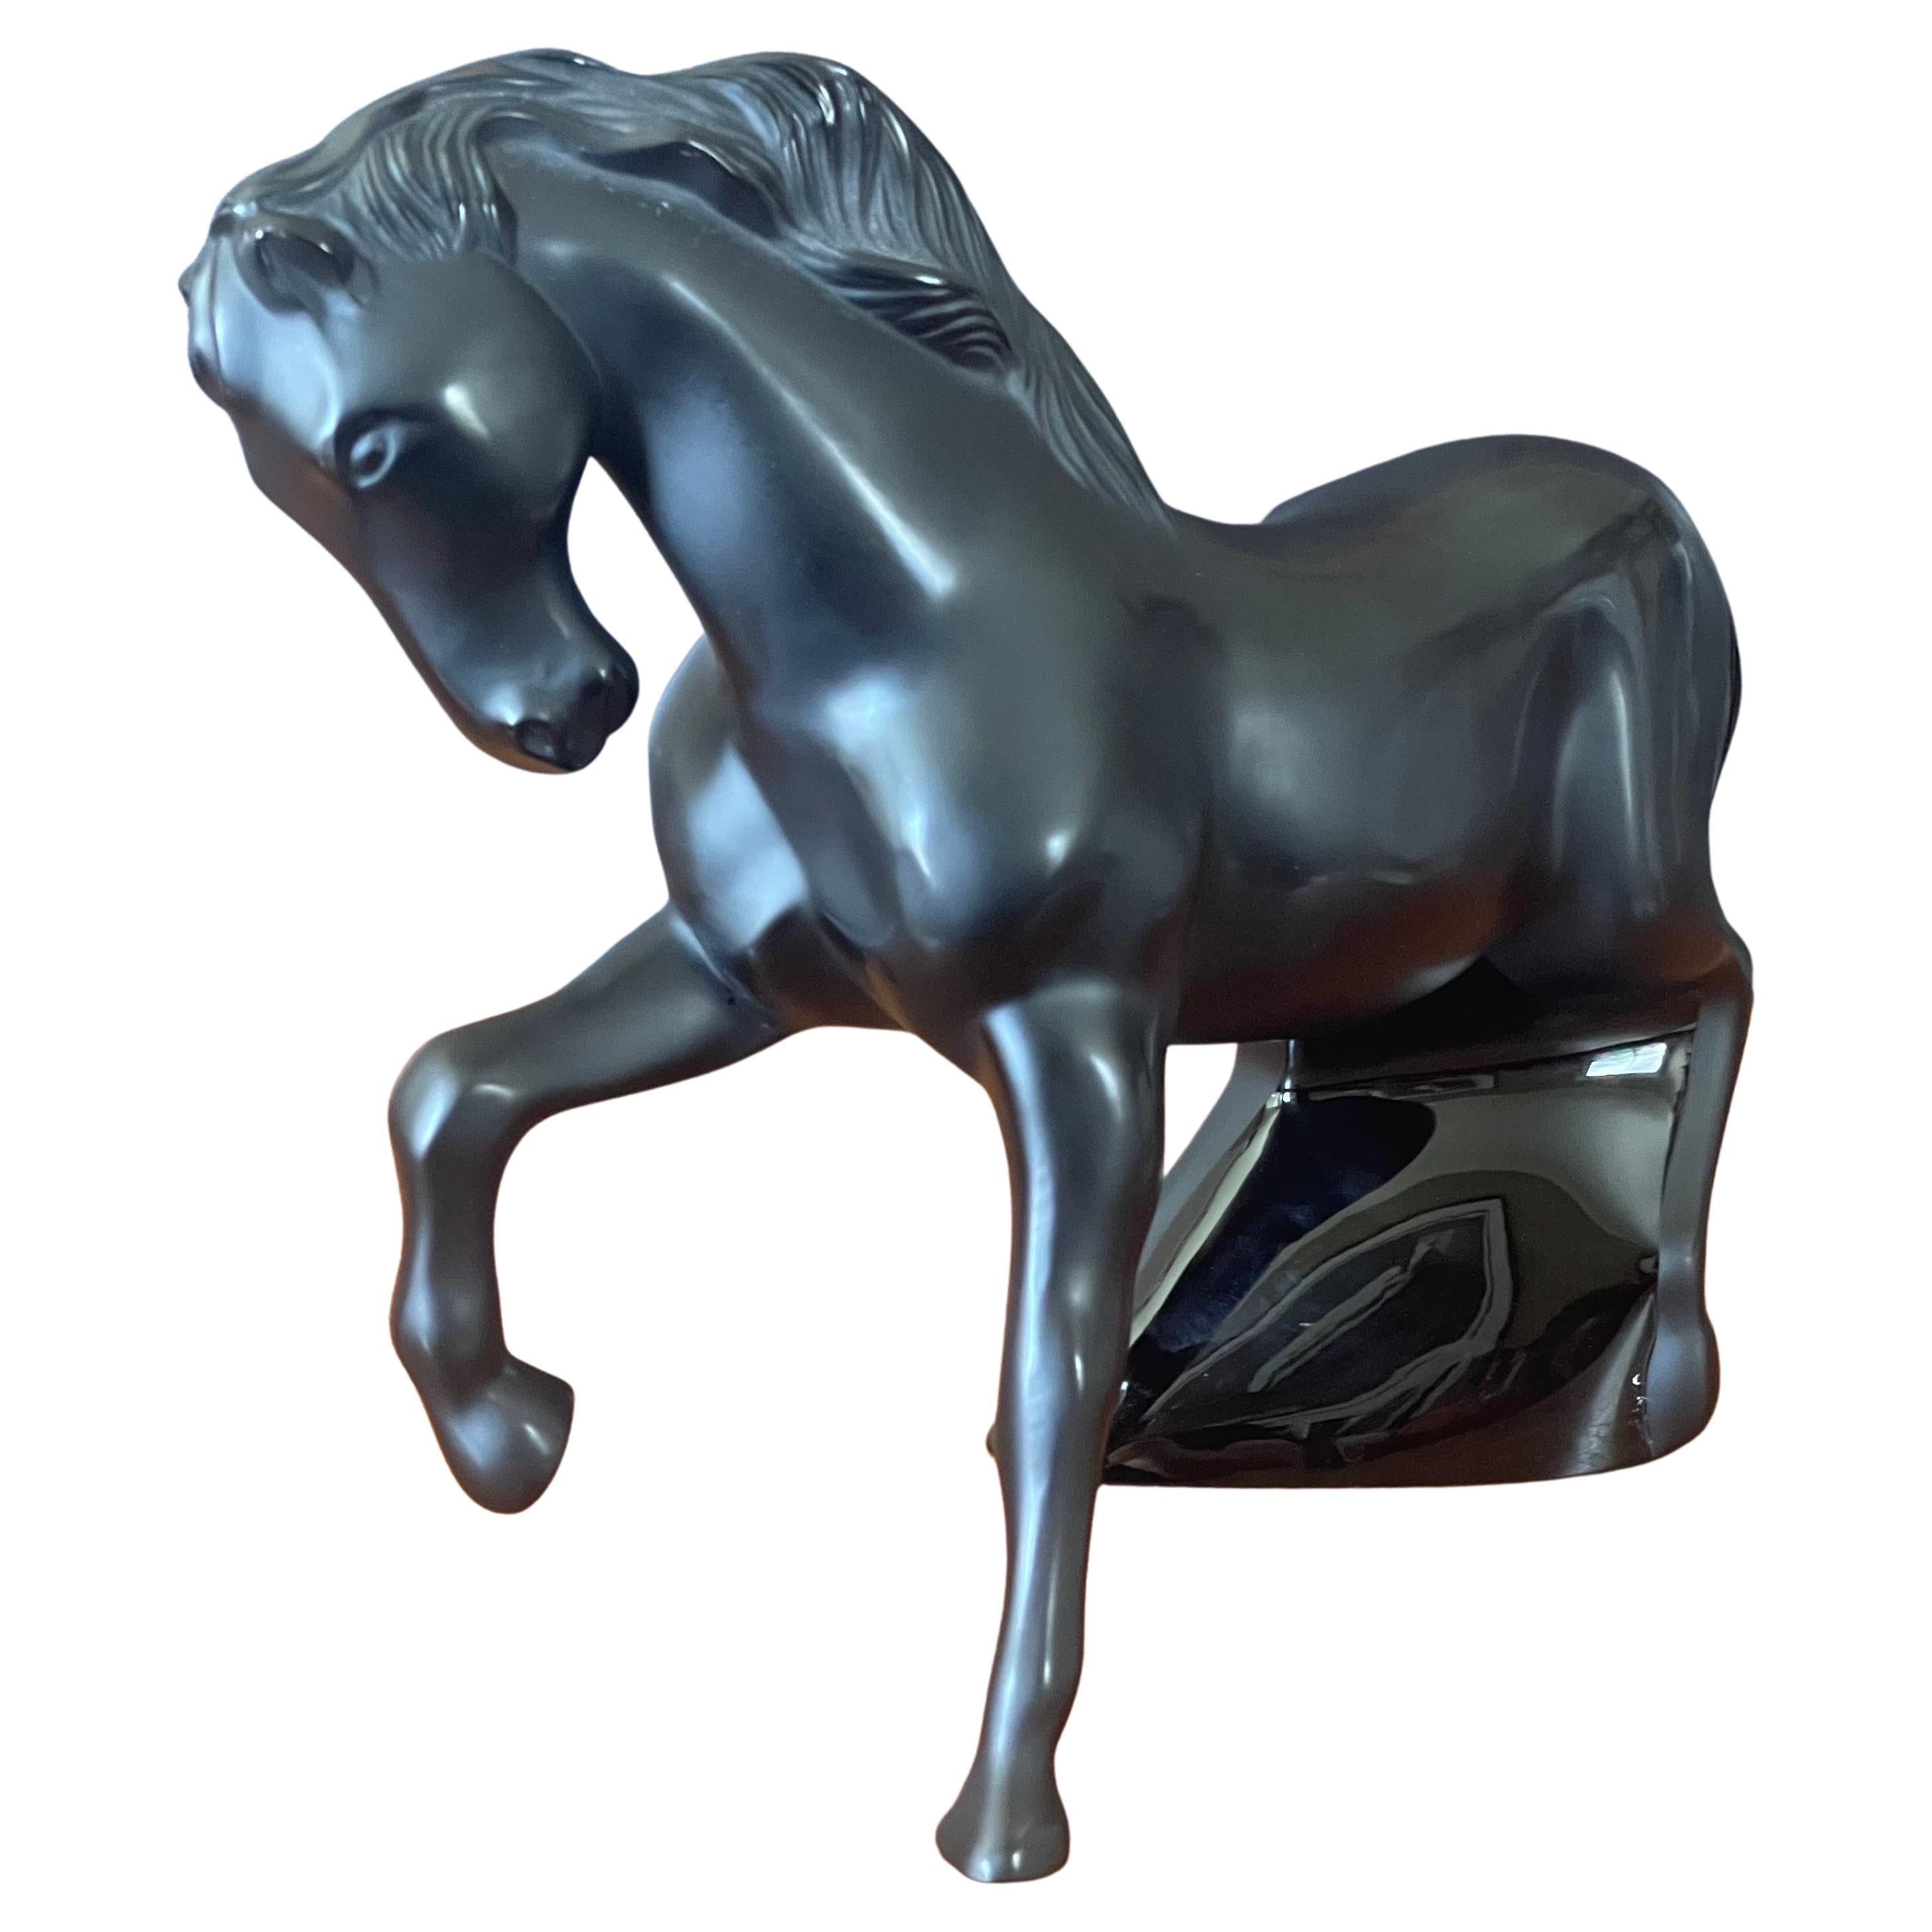 Rare Motif Cheval Mistral Noir Horse / Stallion Sculpture by Lalique of France